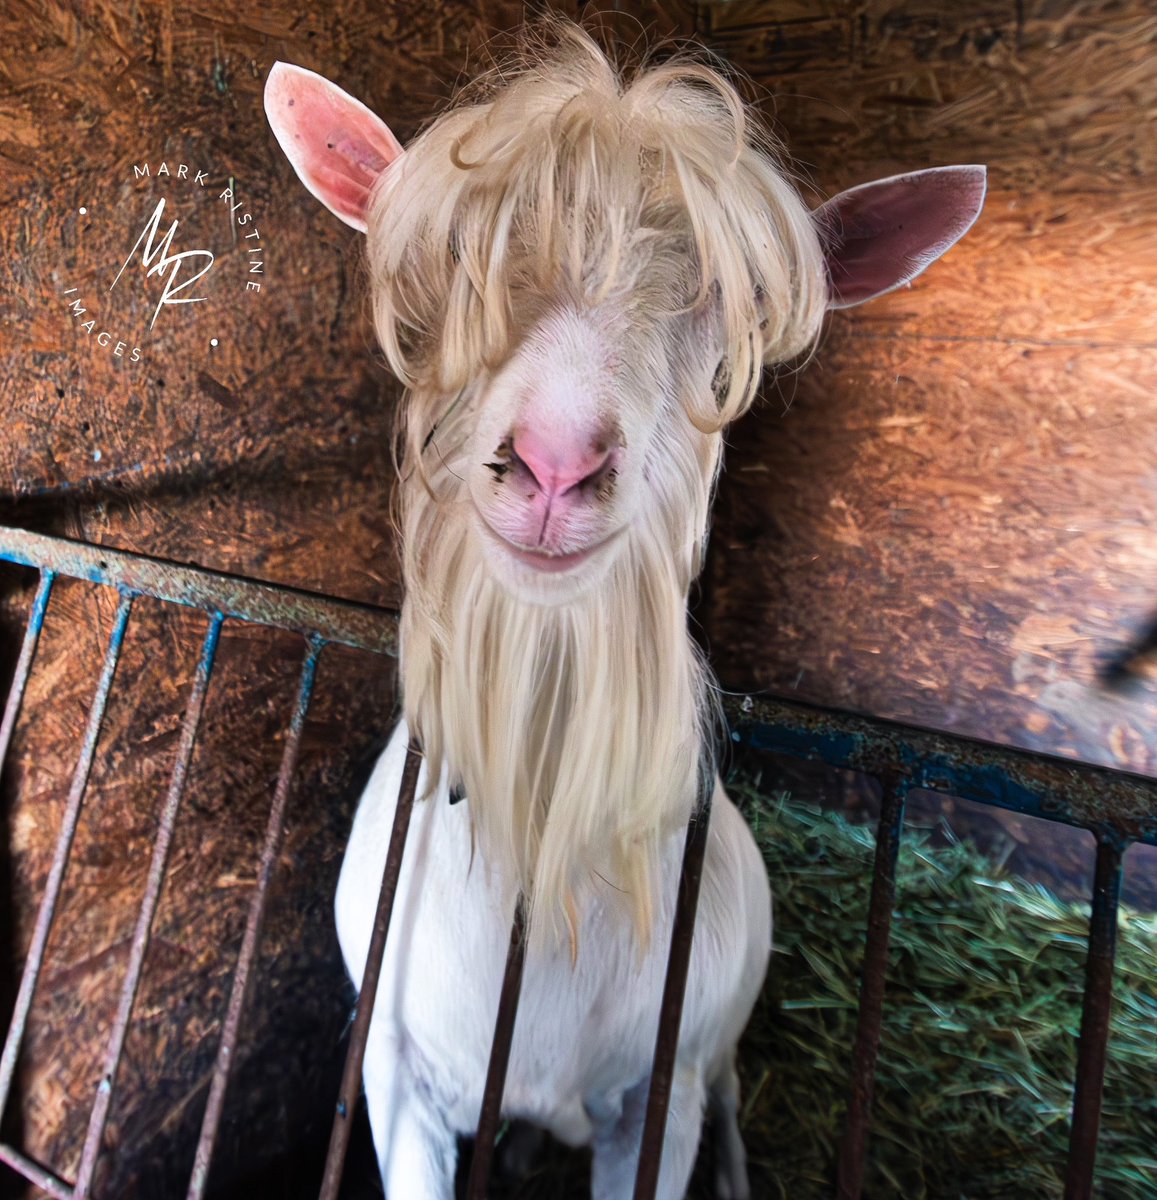 Goat, with bangs. #goat #farmanimal #nikon